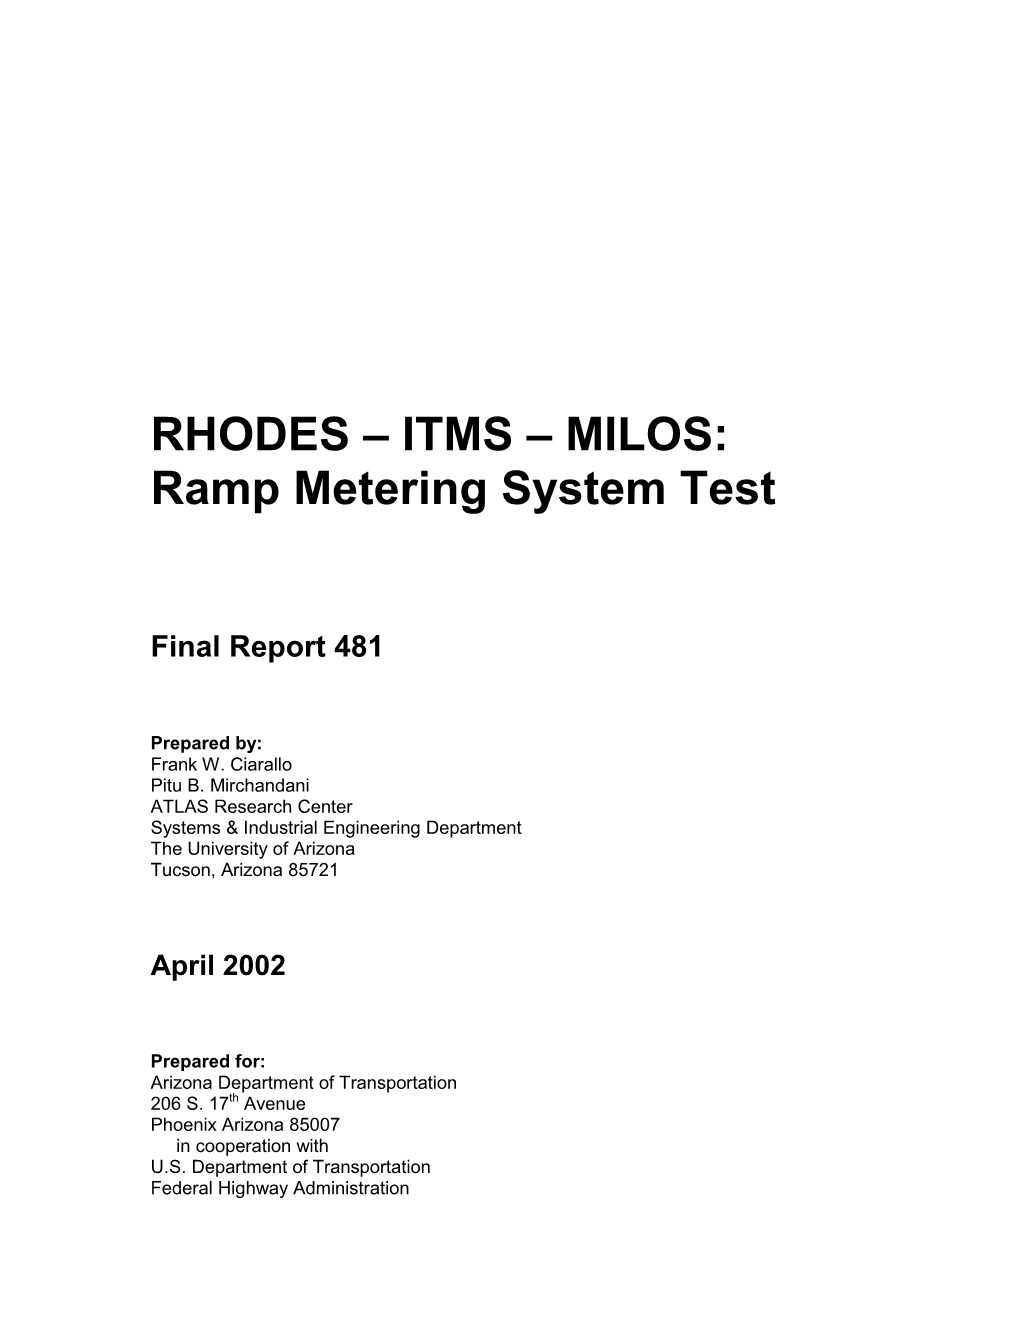 RHODES – ITMS – MILOS: Ramp Metering System Test